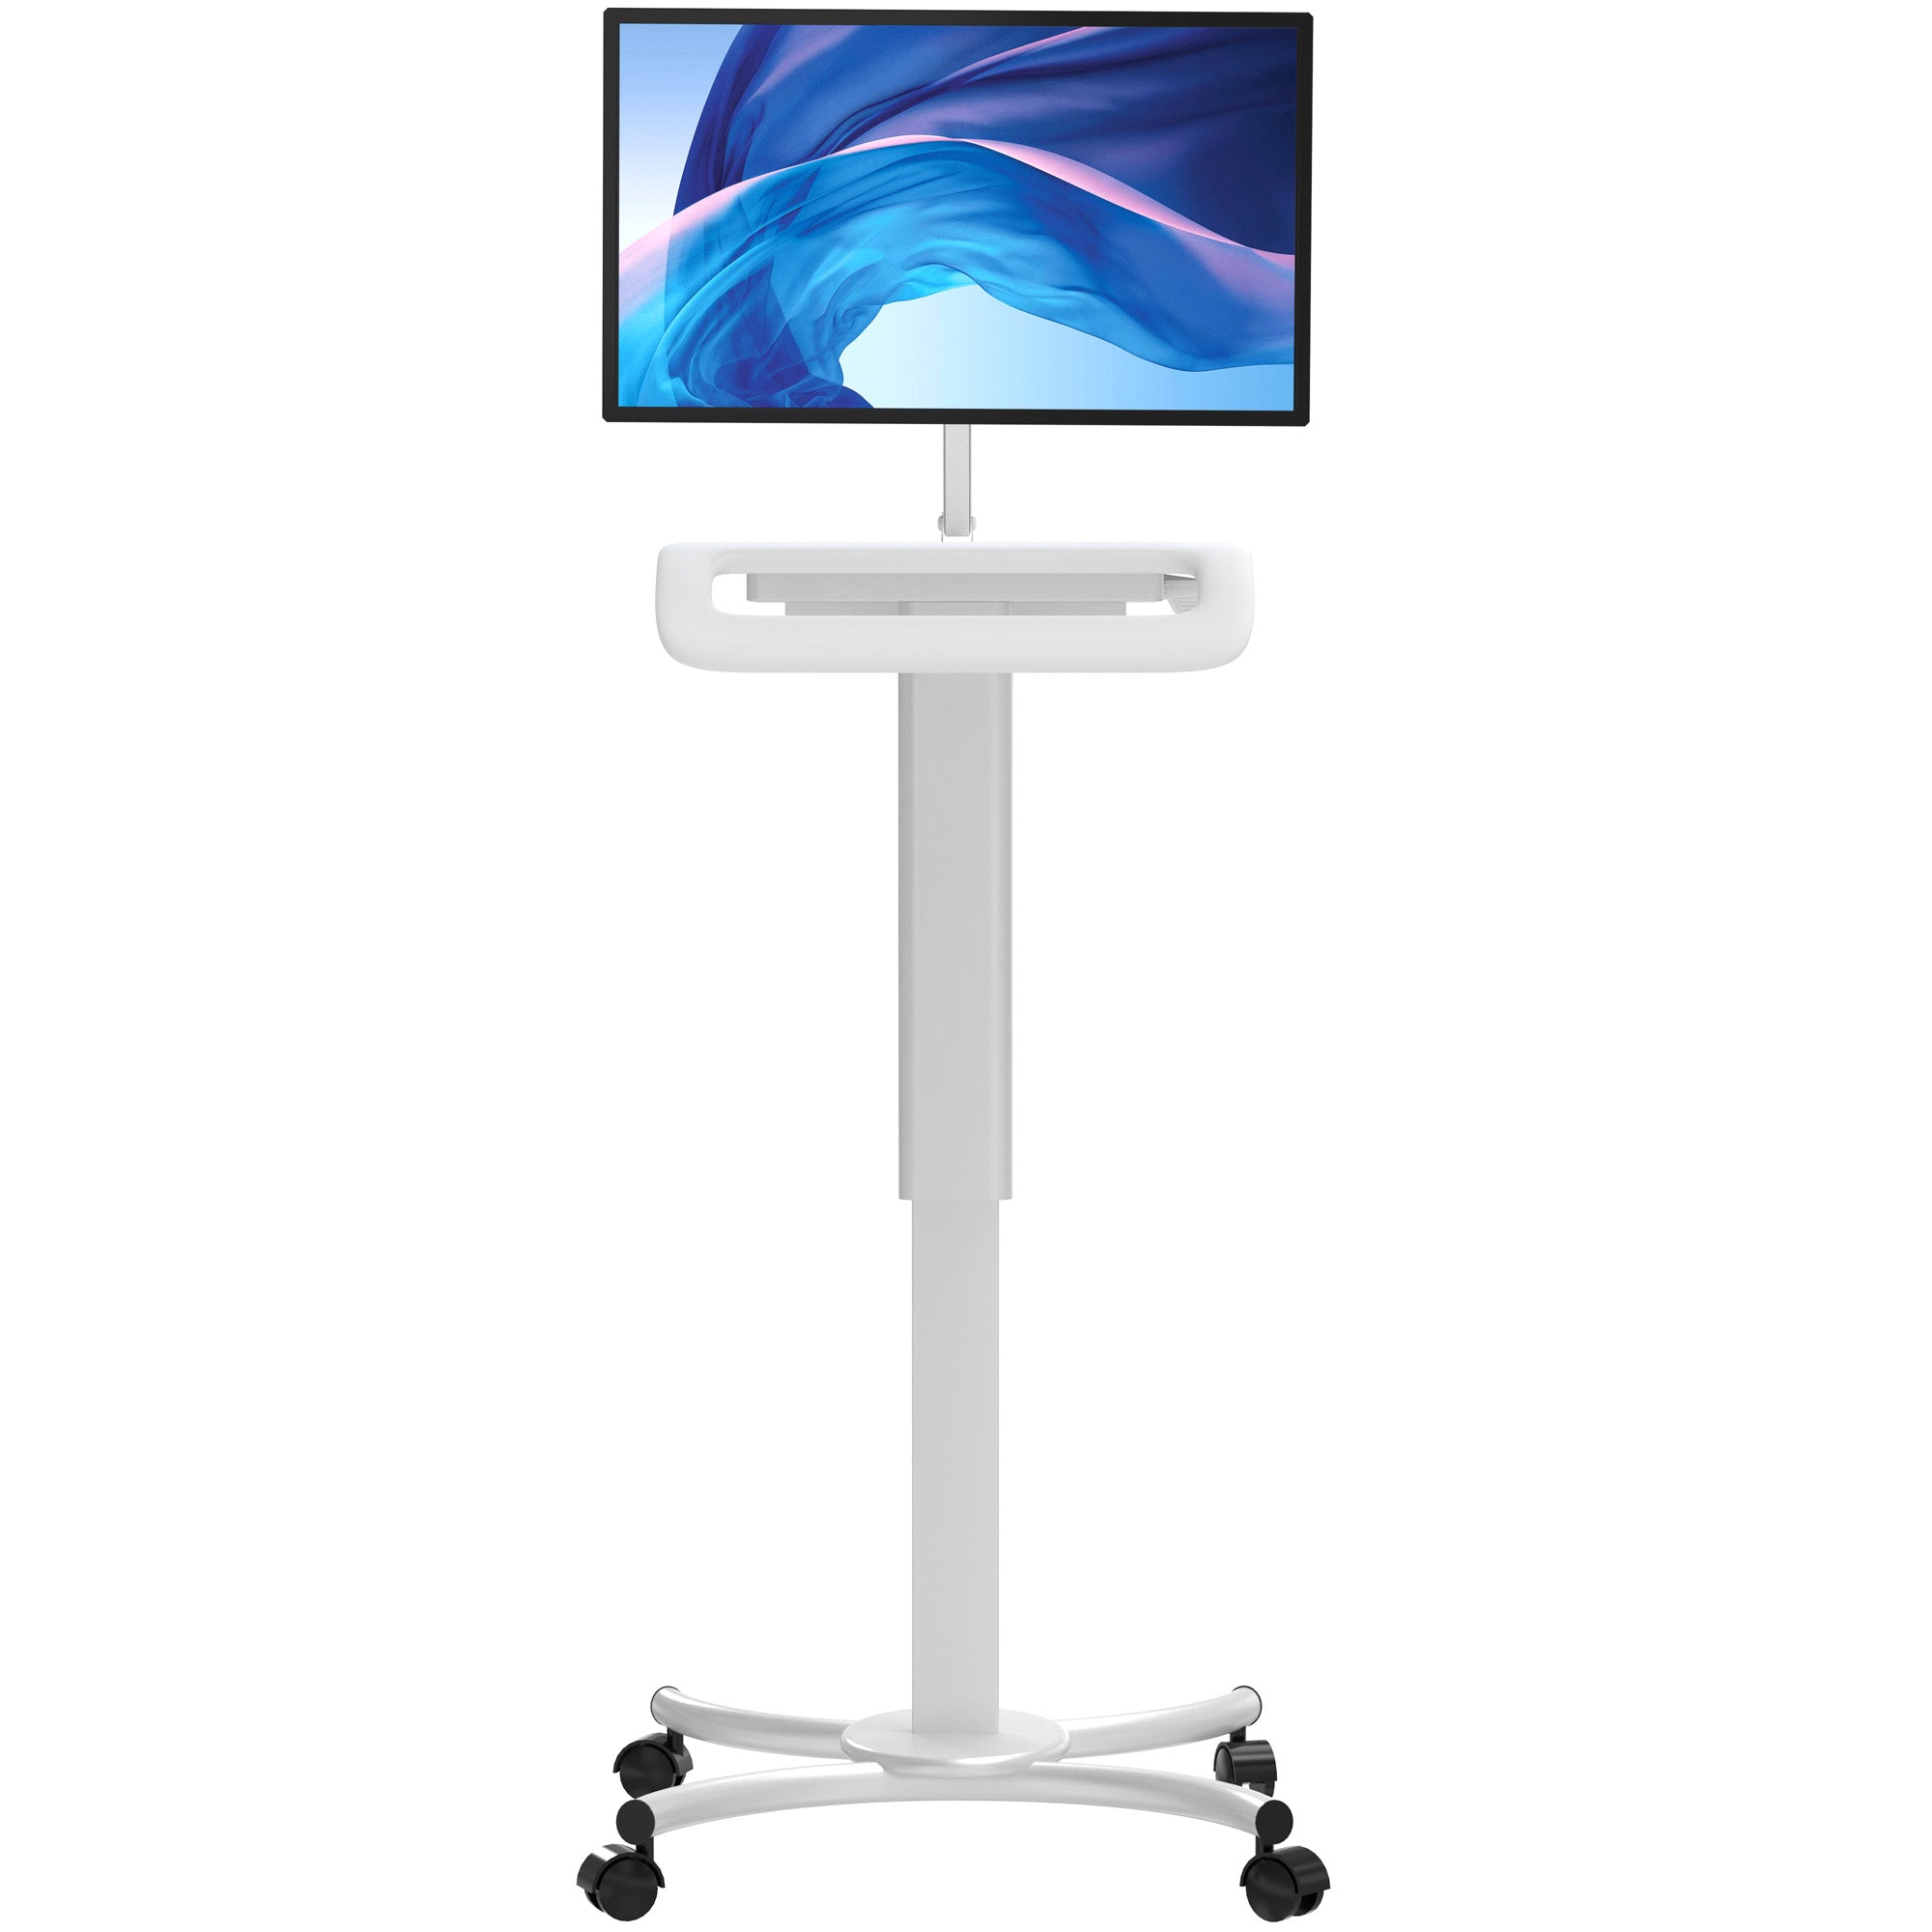 Height-Adjustable Rolling Medical Workstation Cart with VESA Plate